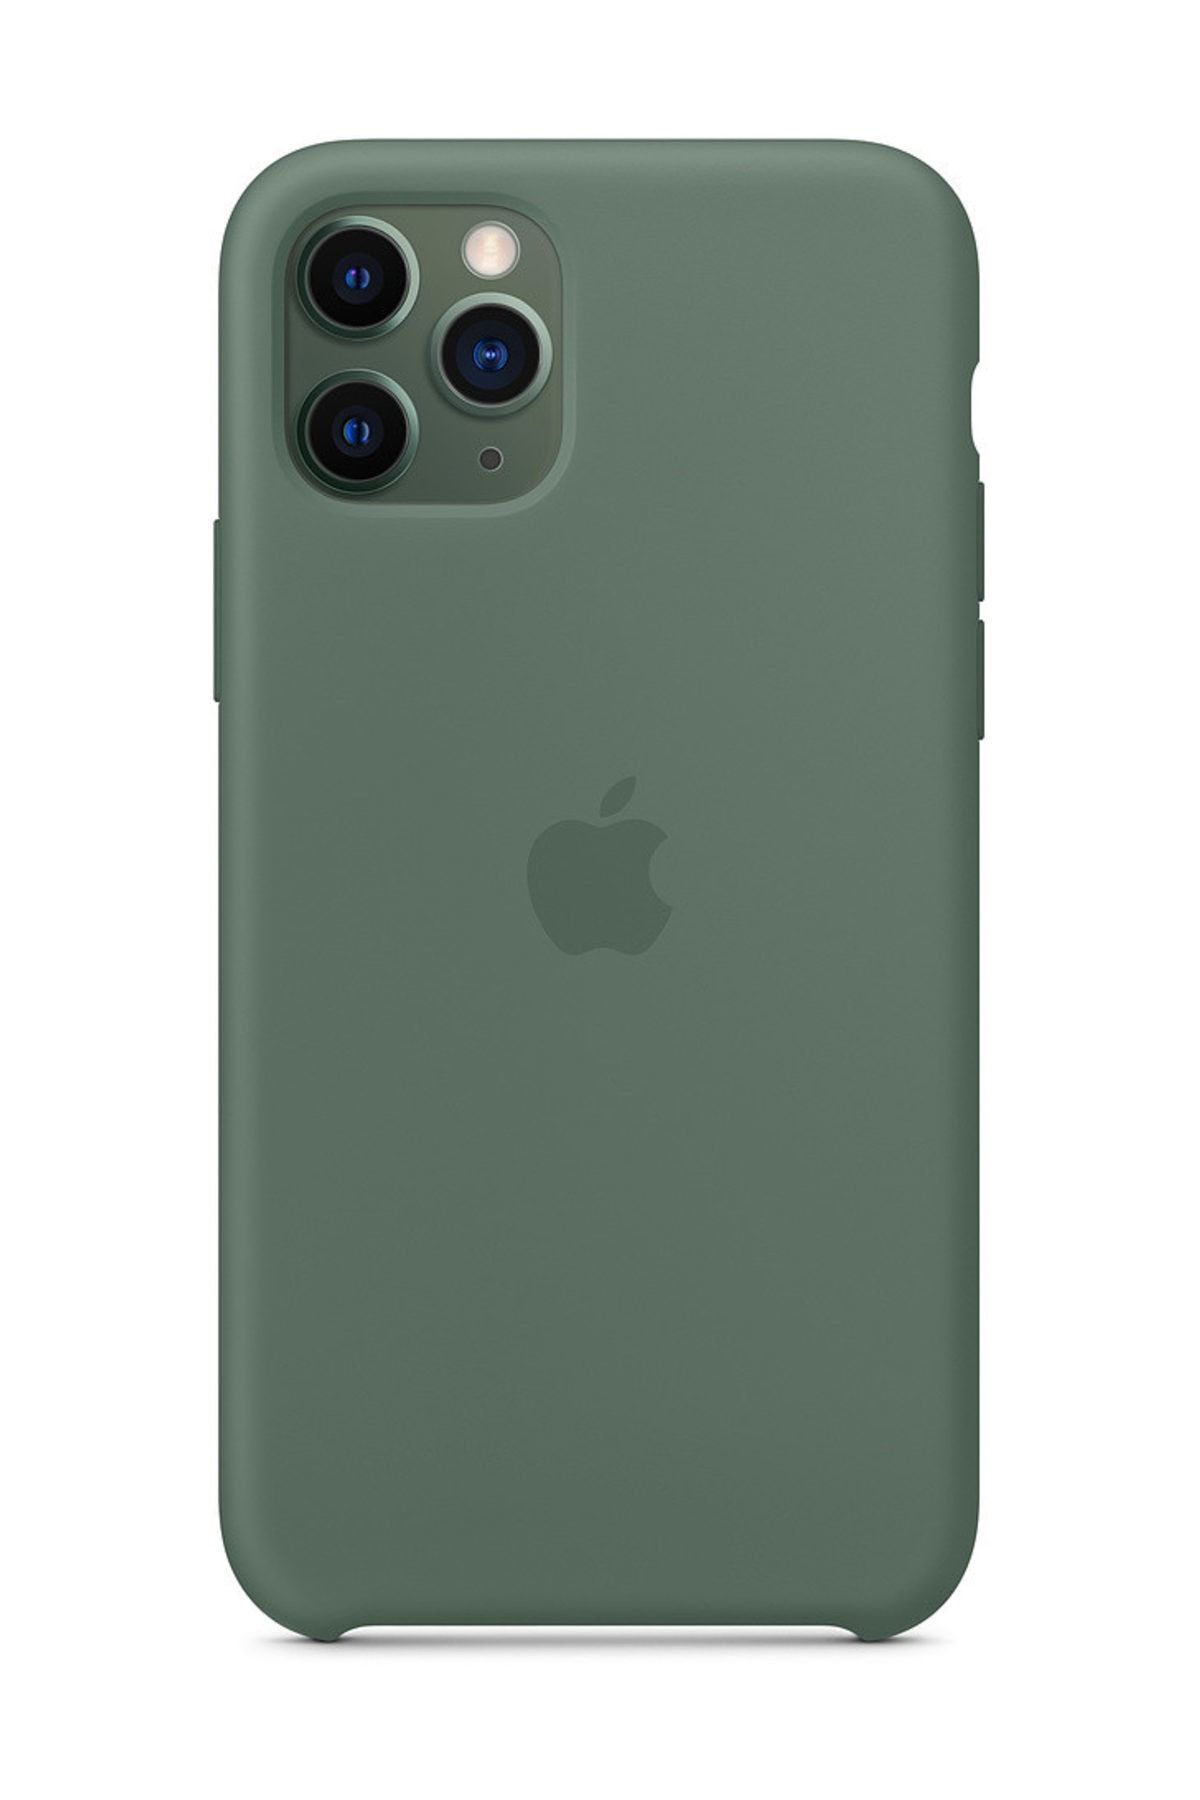 Telefon Aksesuarları iPhone 11 Pro MaxSilikon Kılıf-MWVU2ZM/A - İthalatçı Garantili - Çam Yeşili